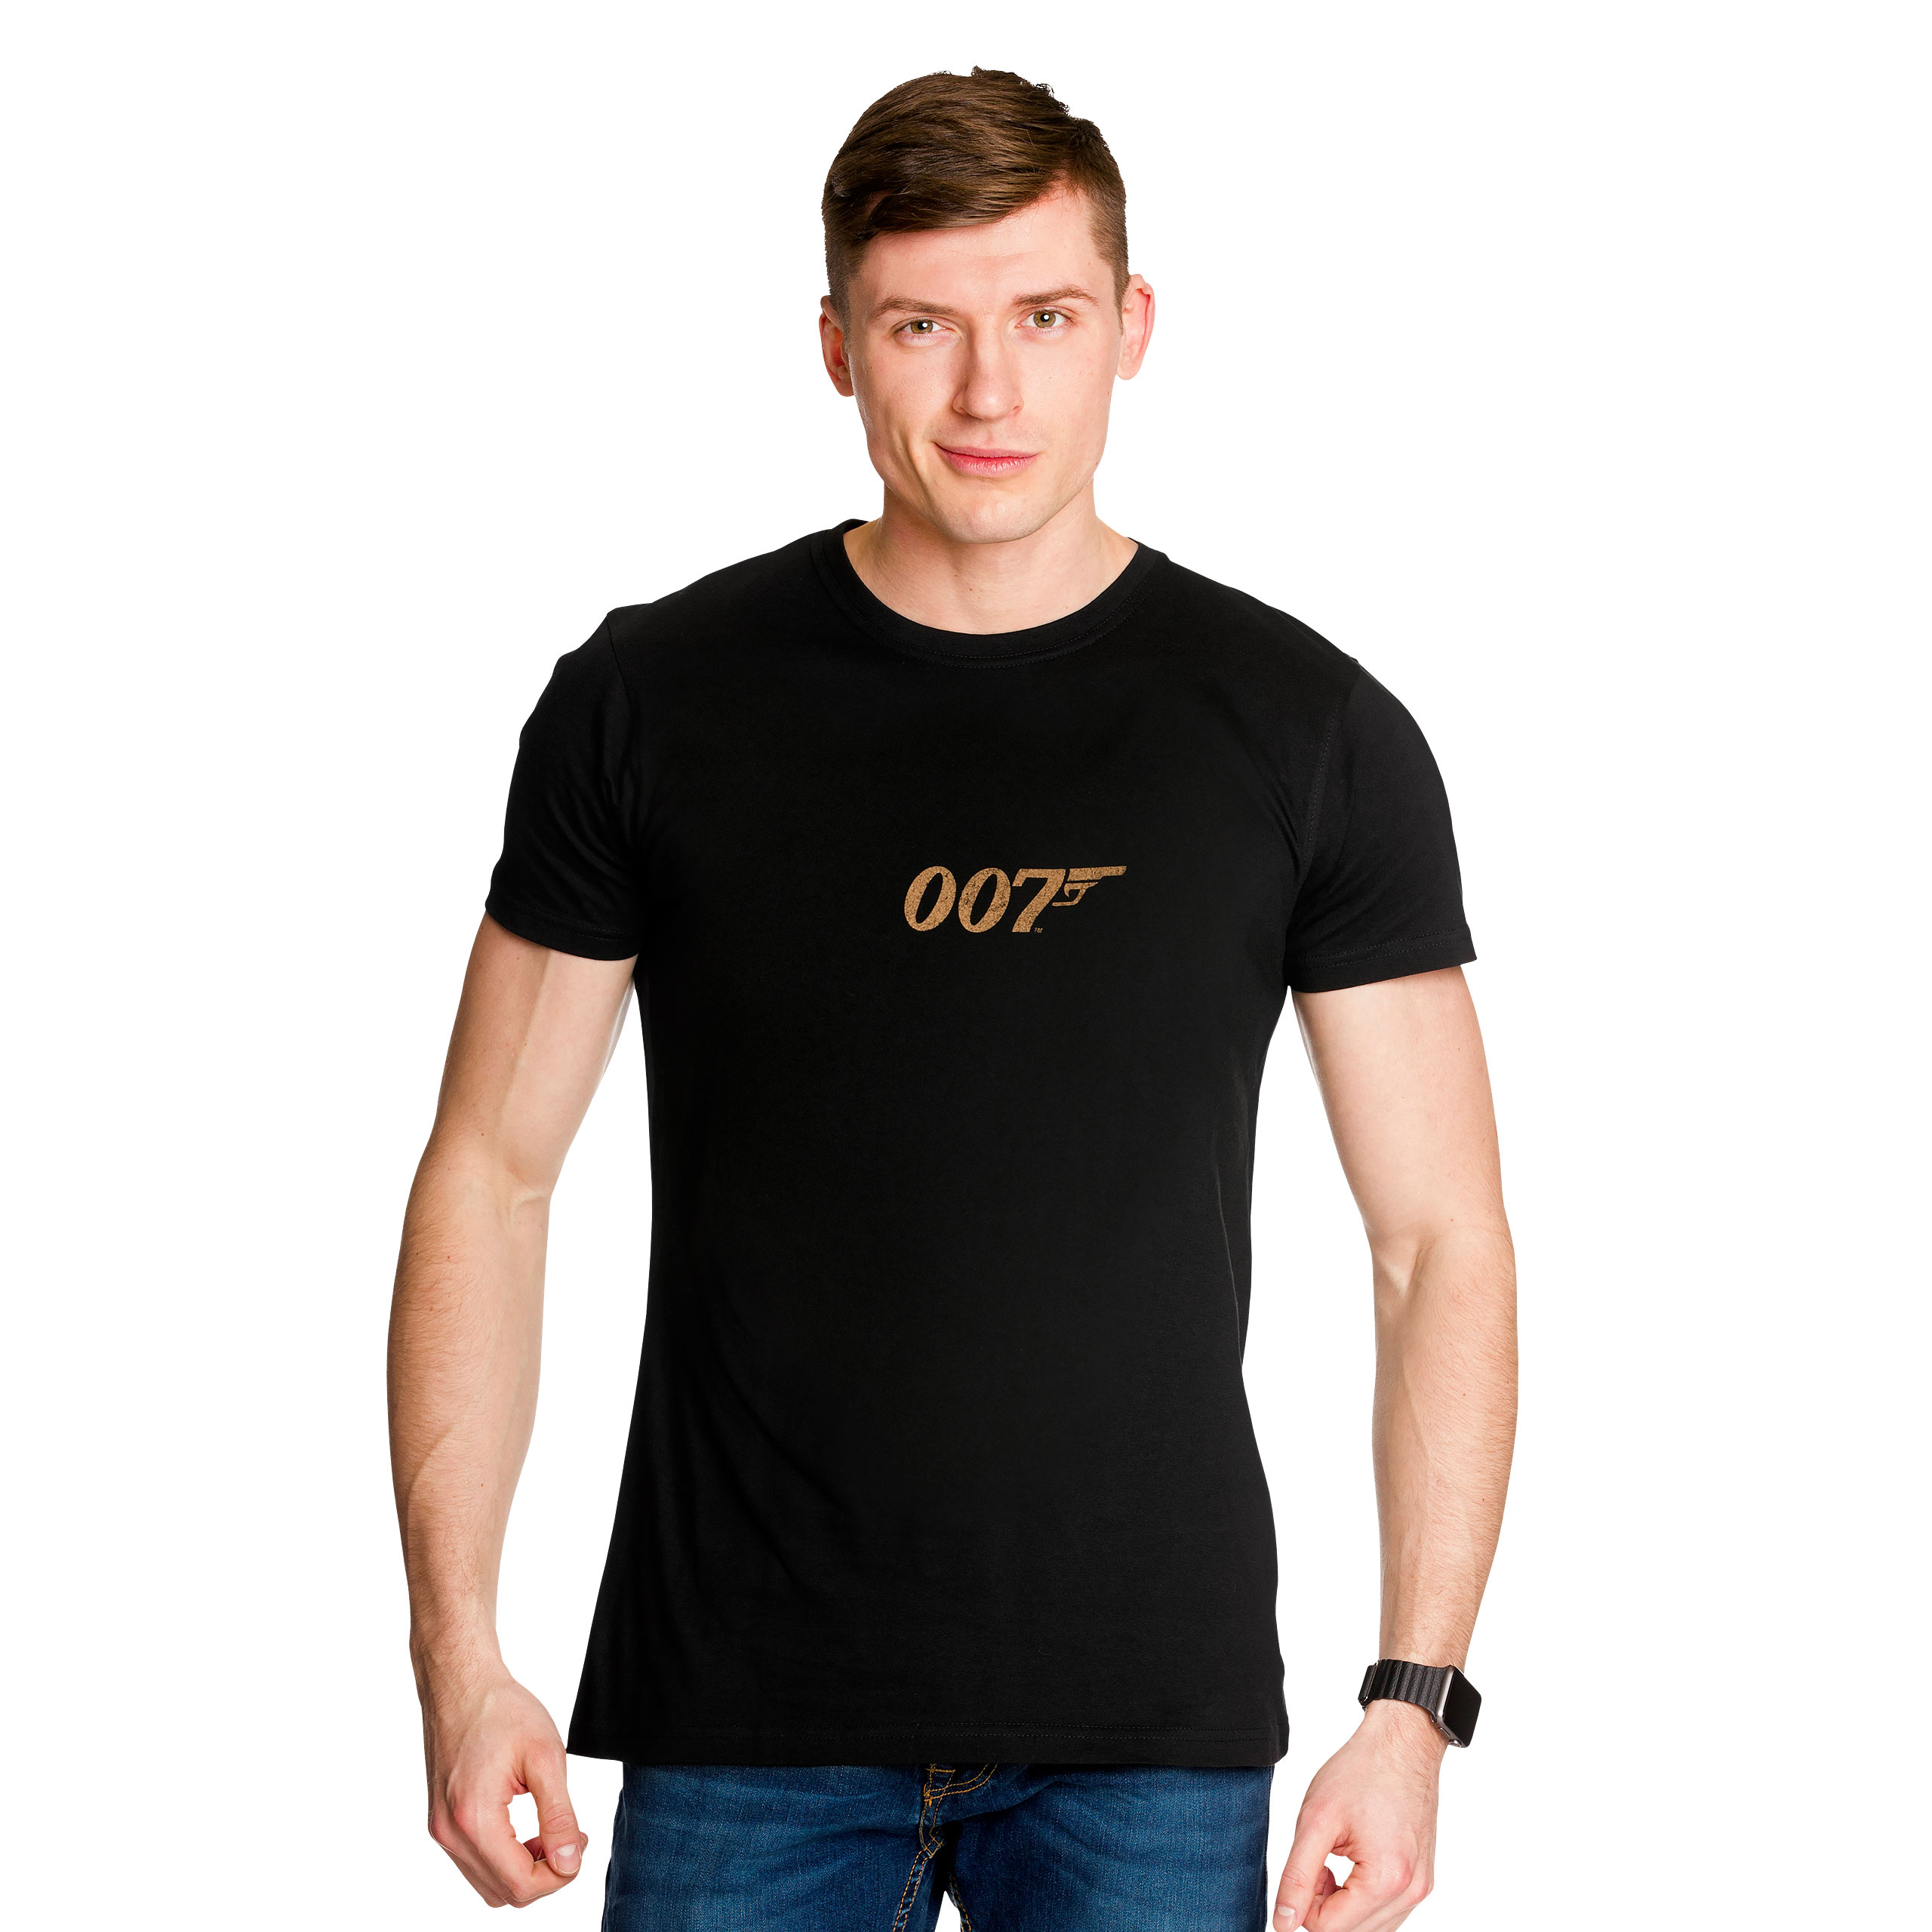 James Bond - No Time To Die T-Shirt Black